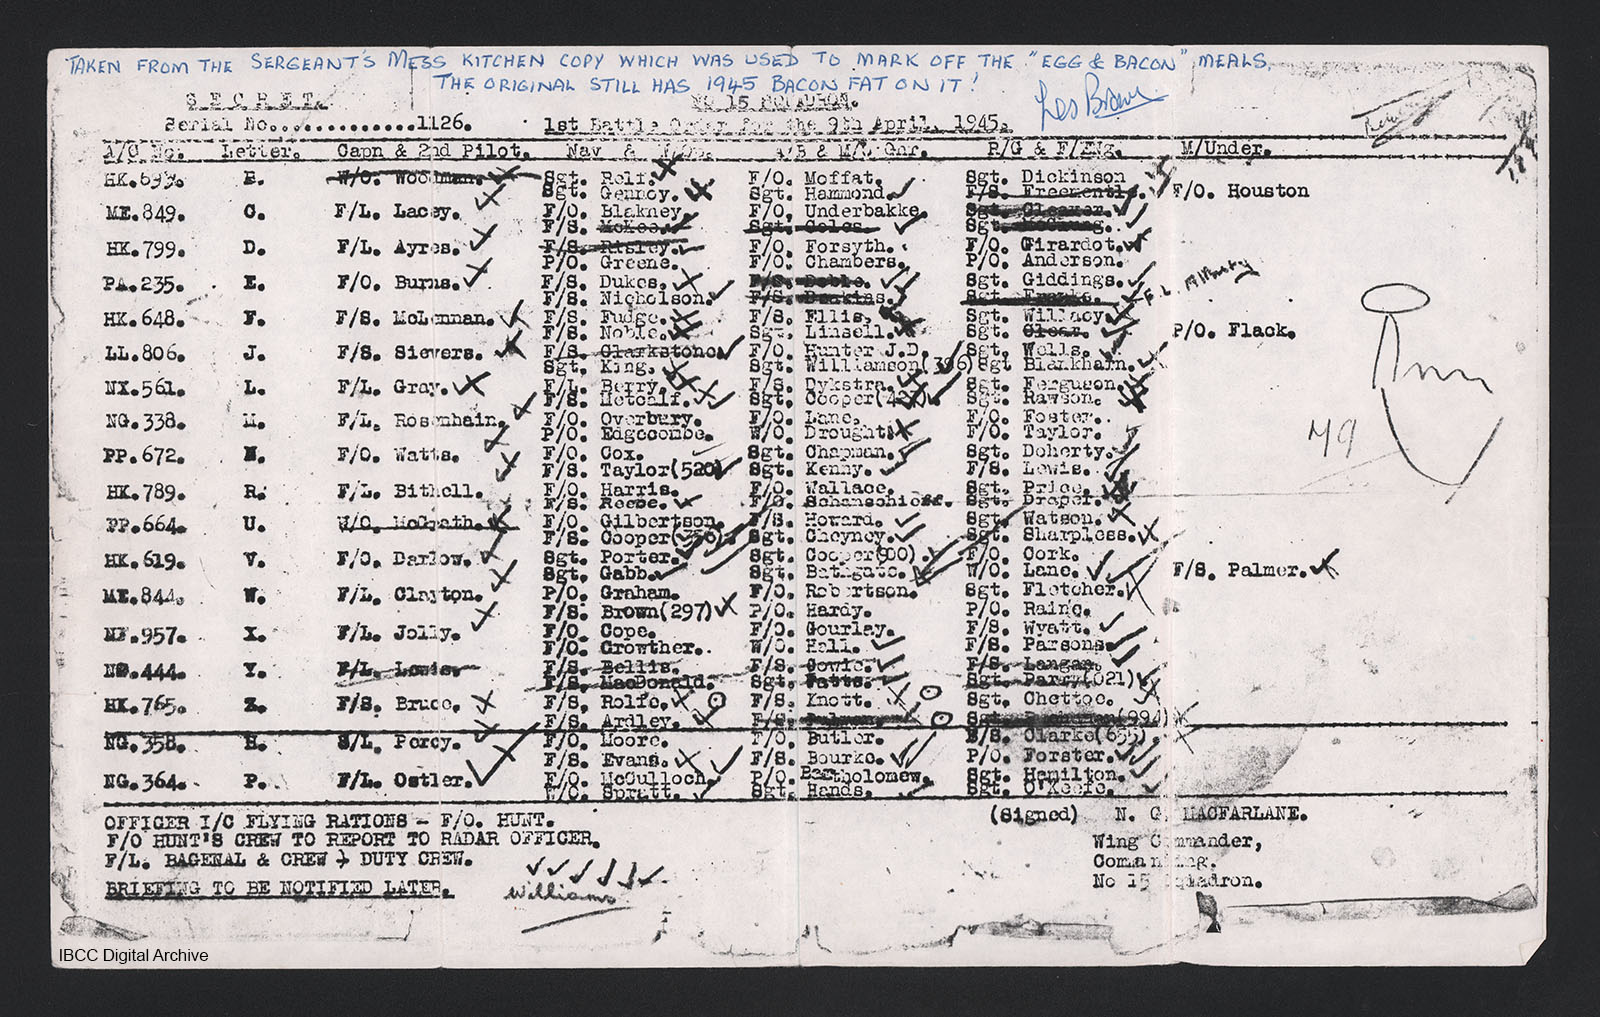 15 Squadron Battle Order 9th April 1945 · IBCC Digital Archive